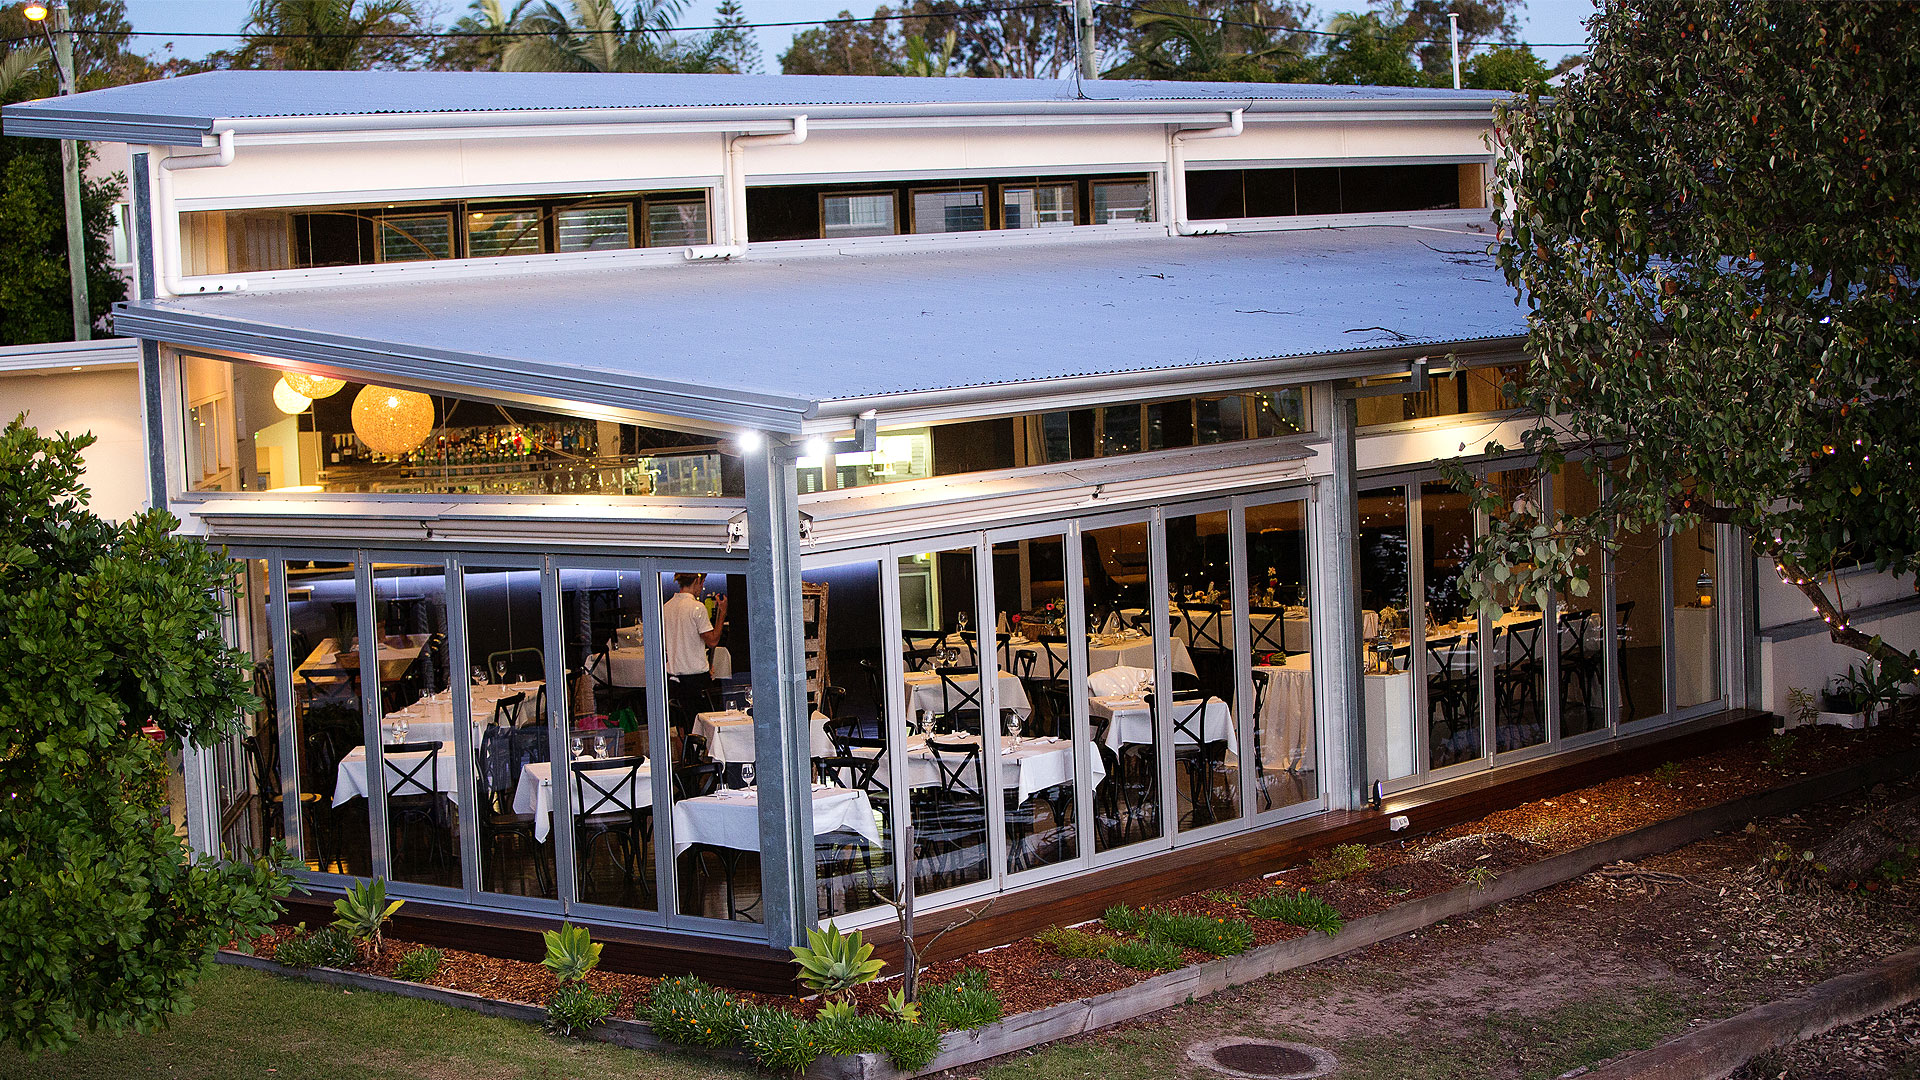 noosa river cruise restaurant